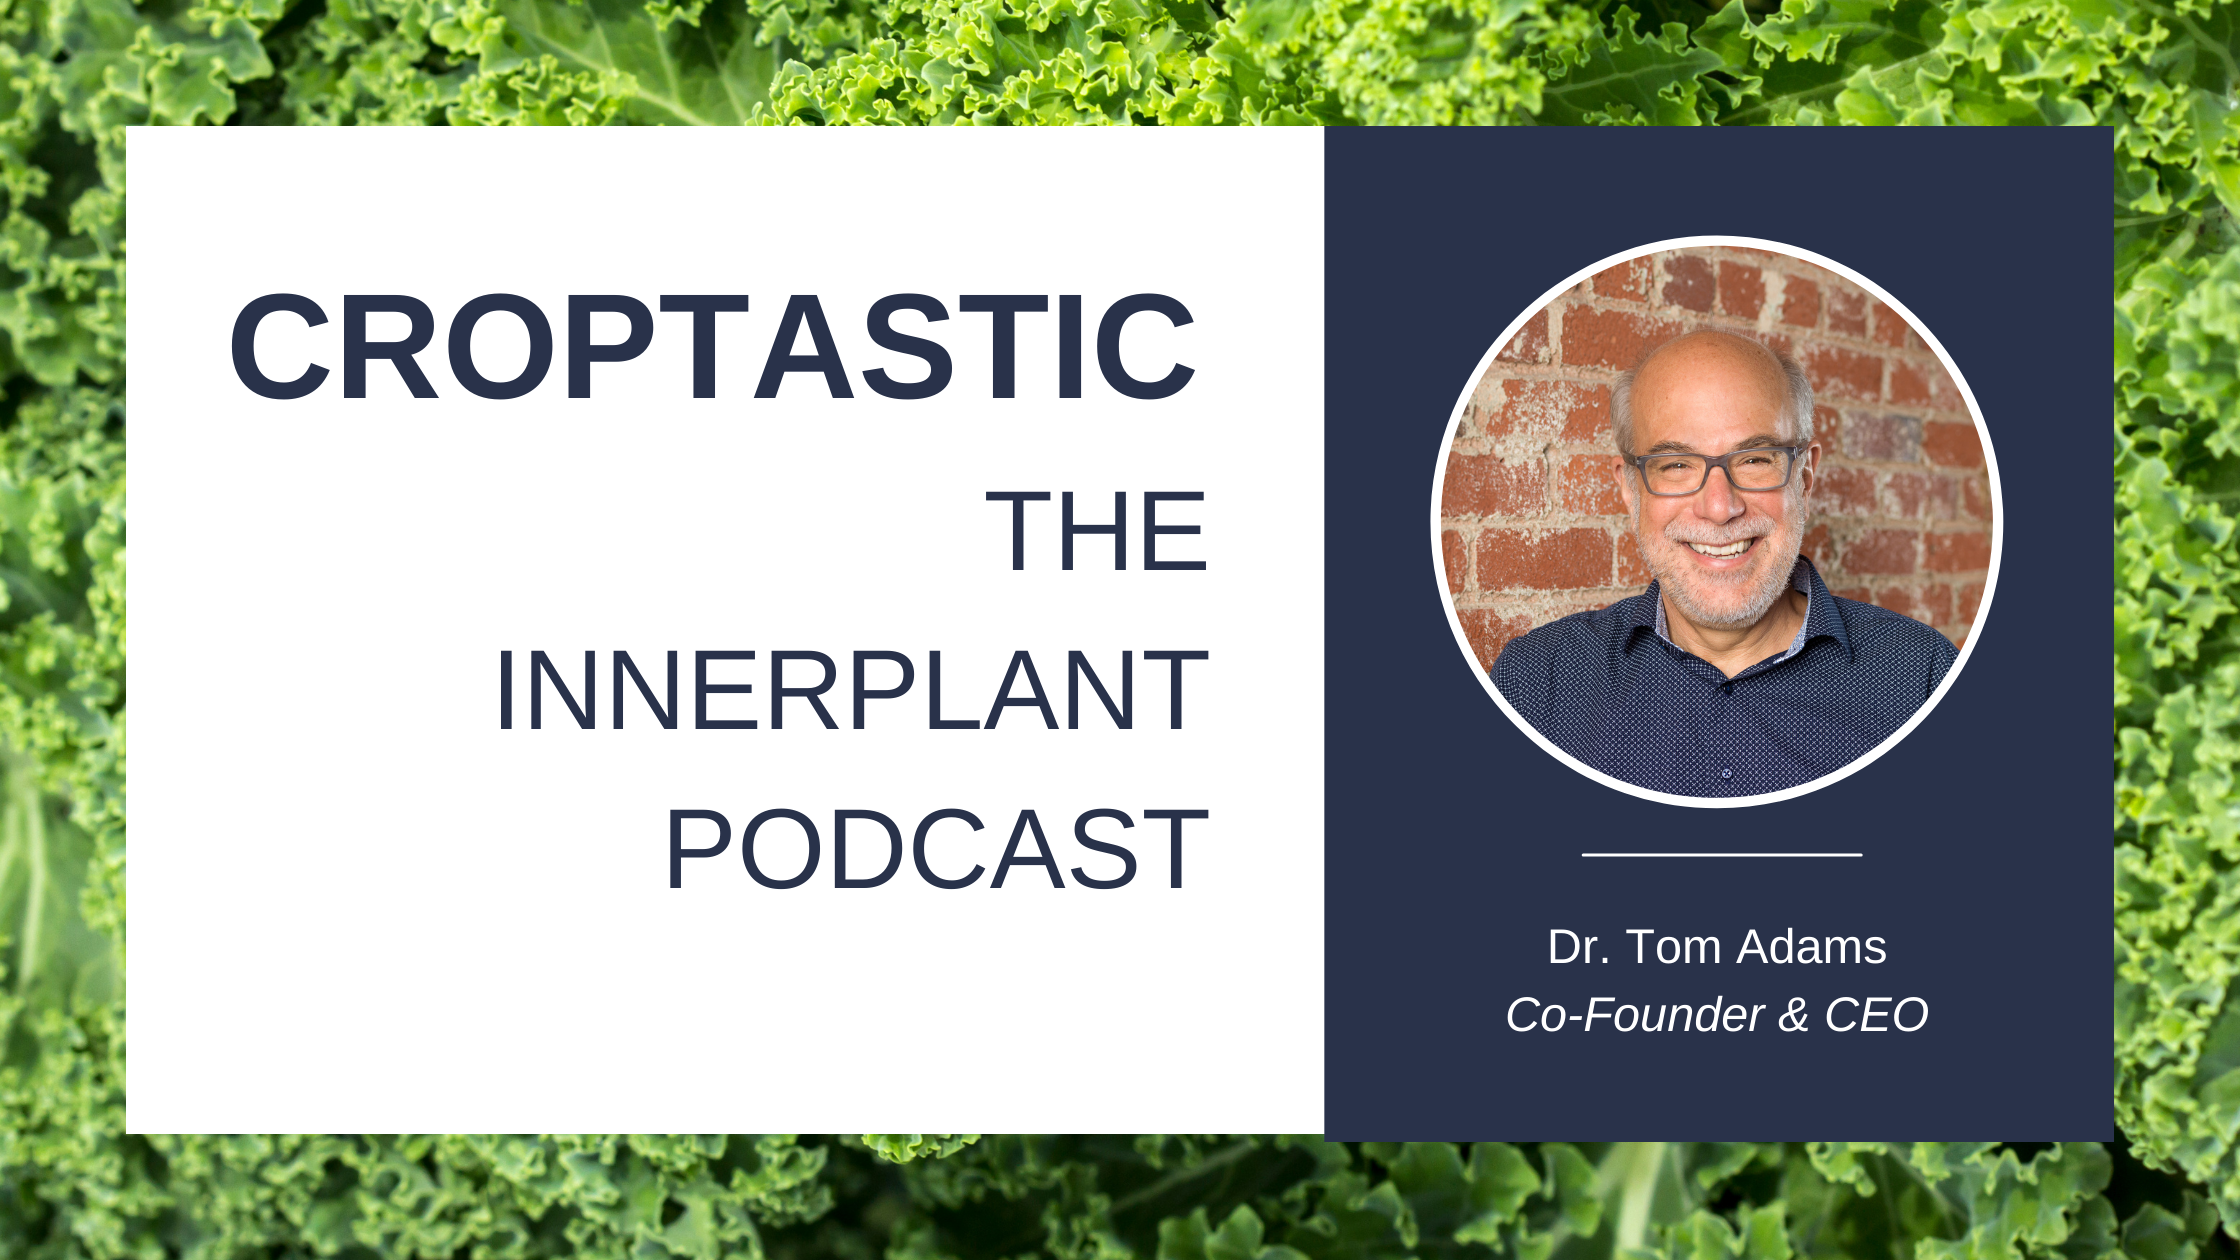 Dr. Tom Adams on Croptastic InnerPlant Podcast